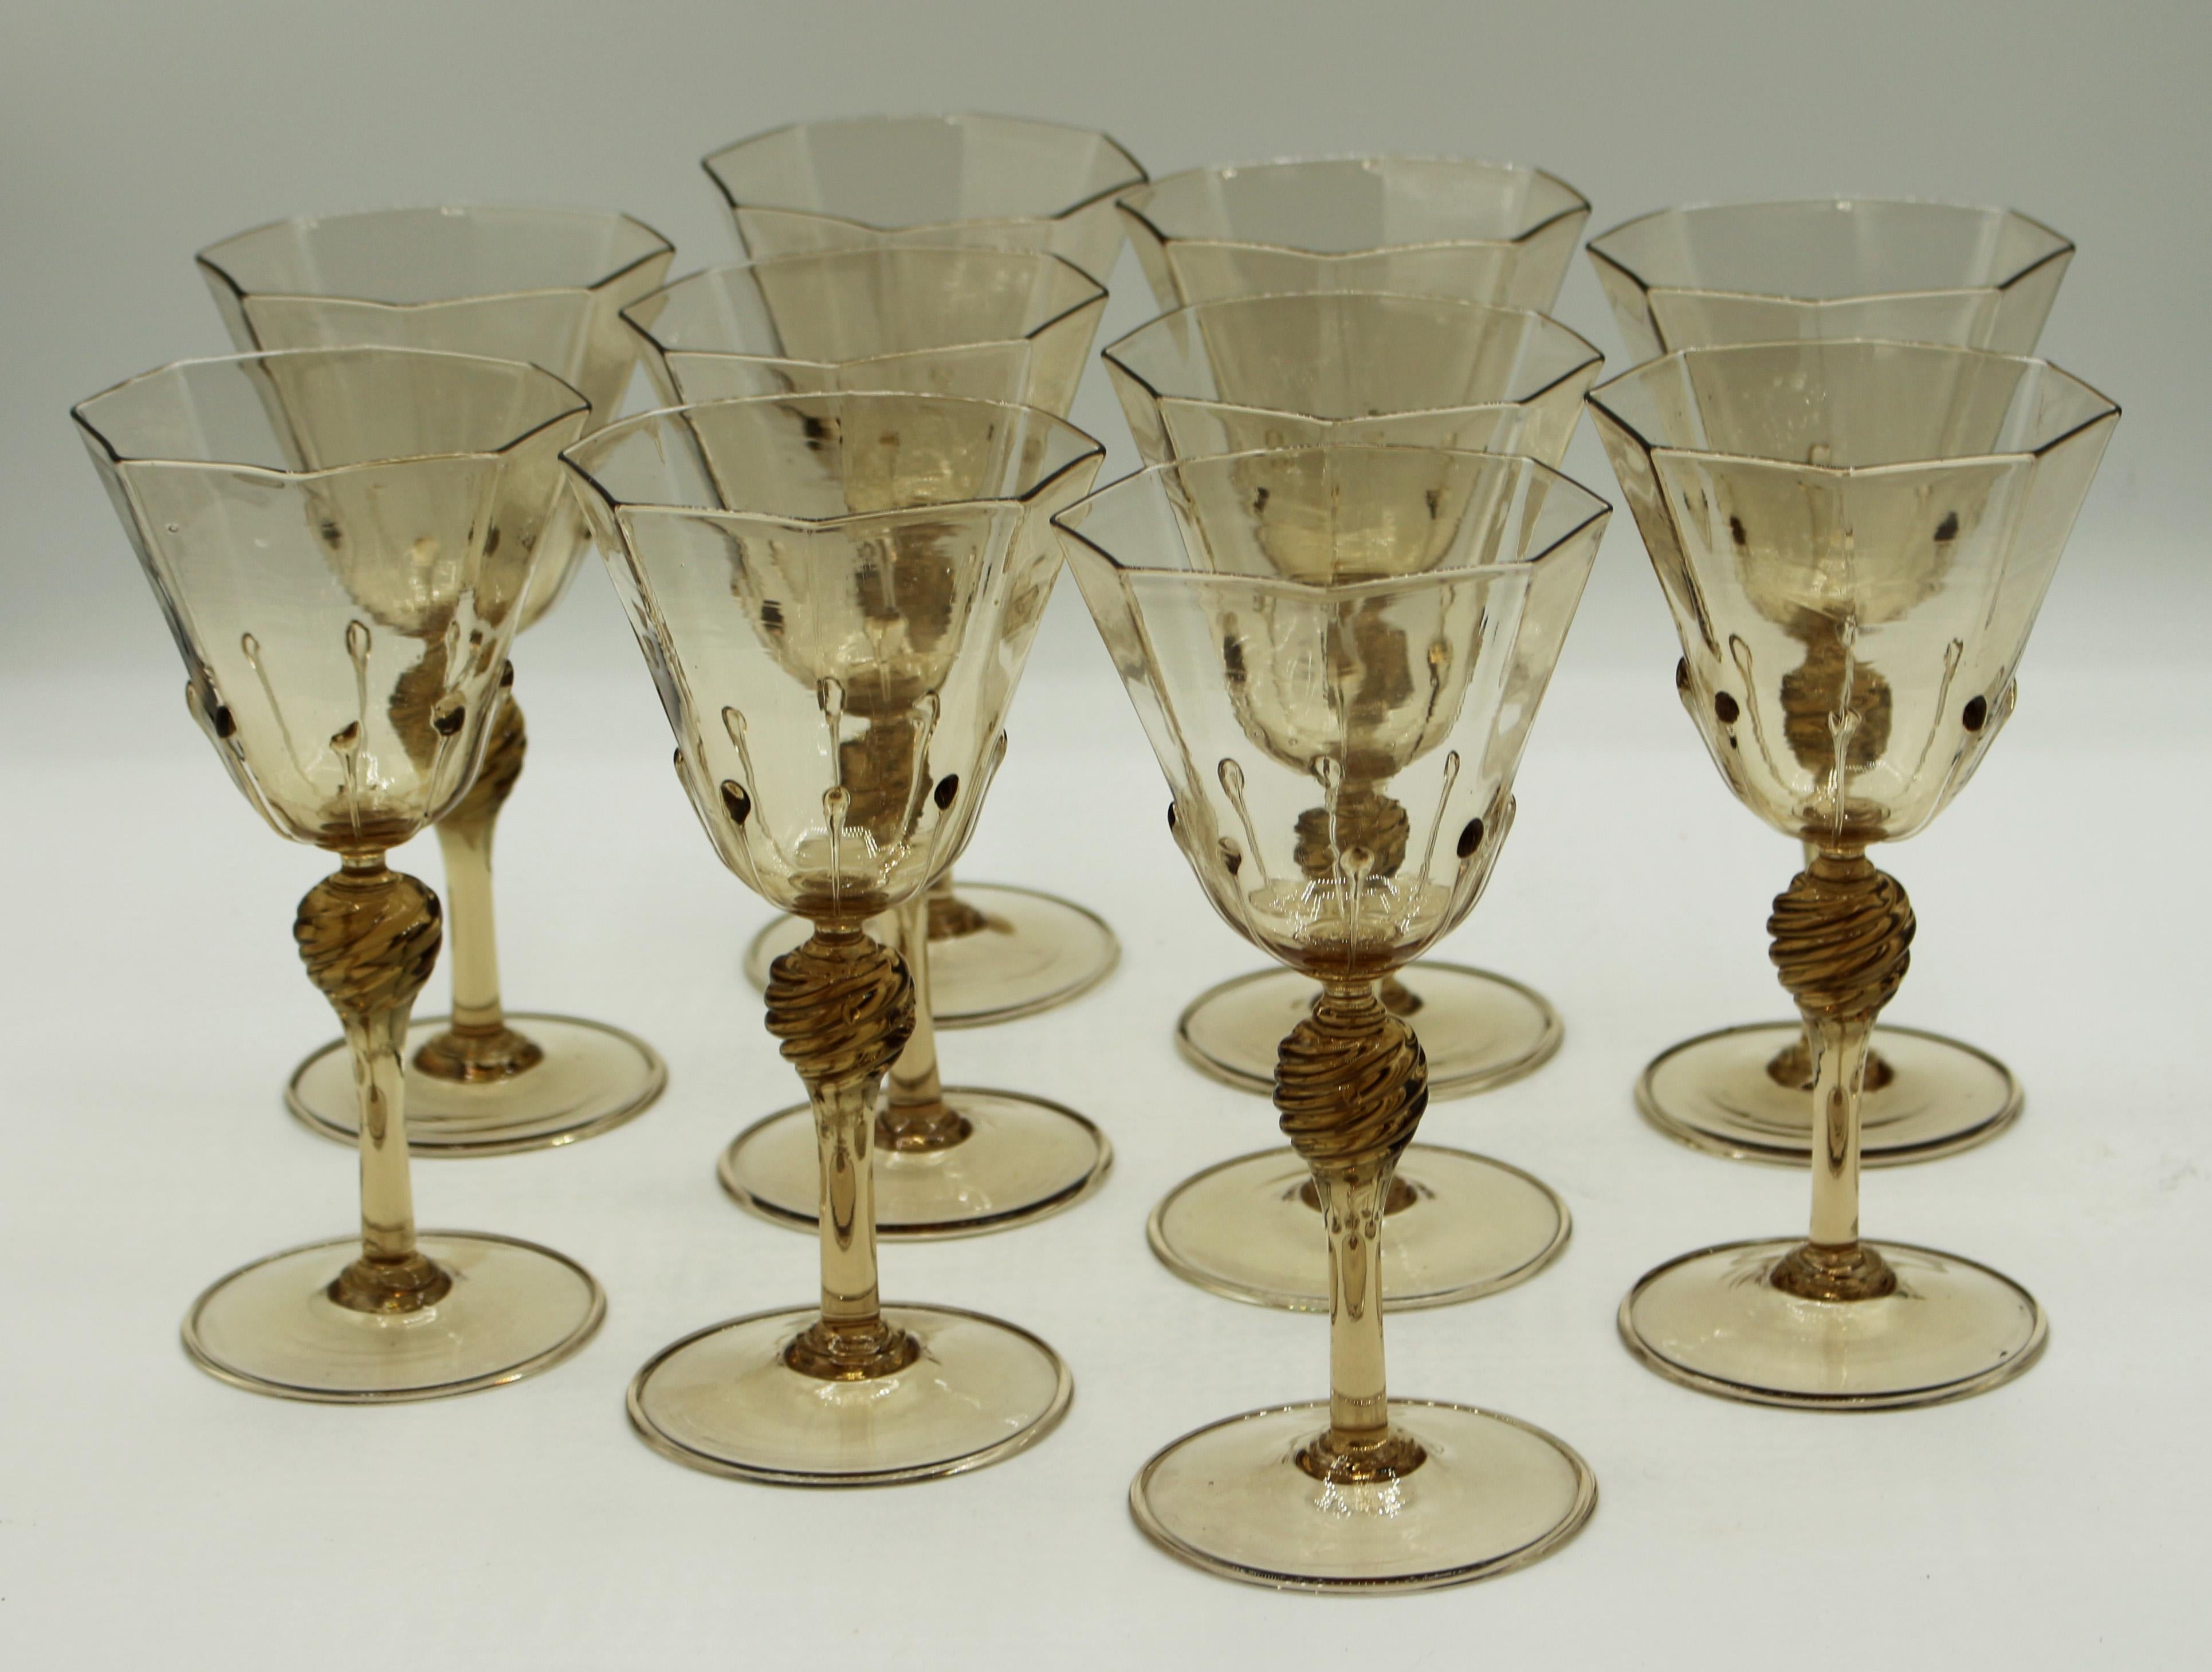 Circa 1925 Venetian Blown Glass Goblets, Set of 10 4